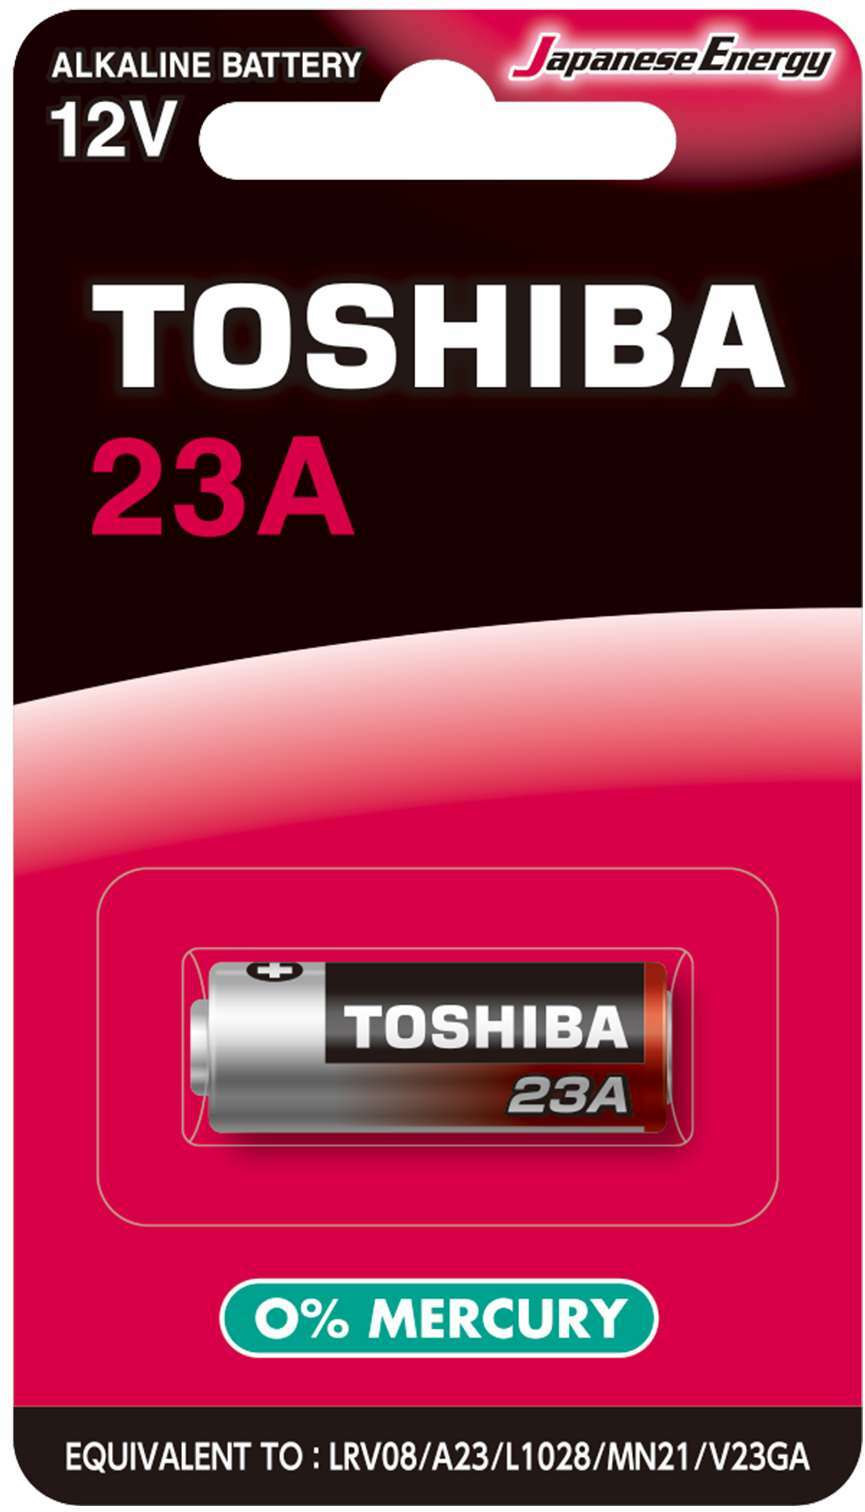 Toshiba 23a - Pile / Accu / Batterie - Main picture